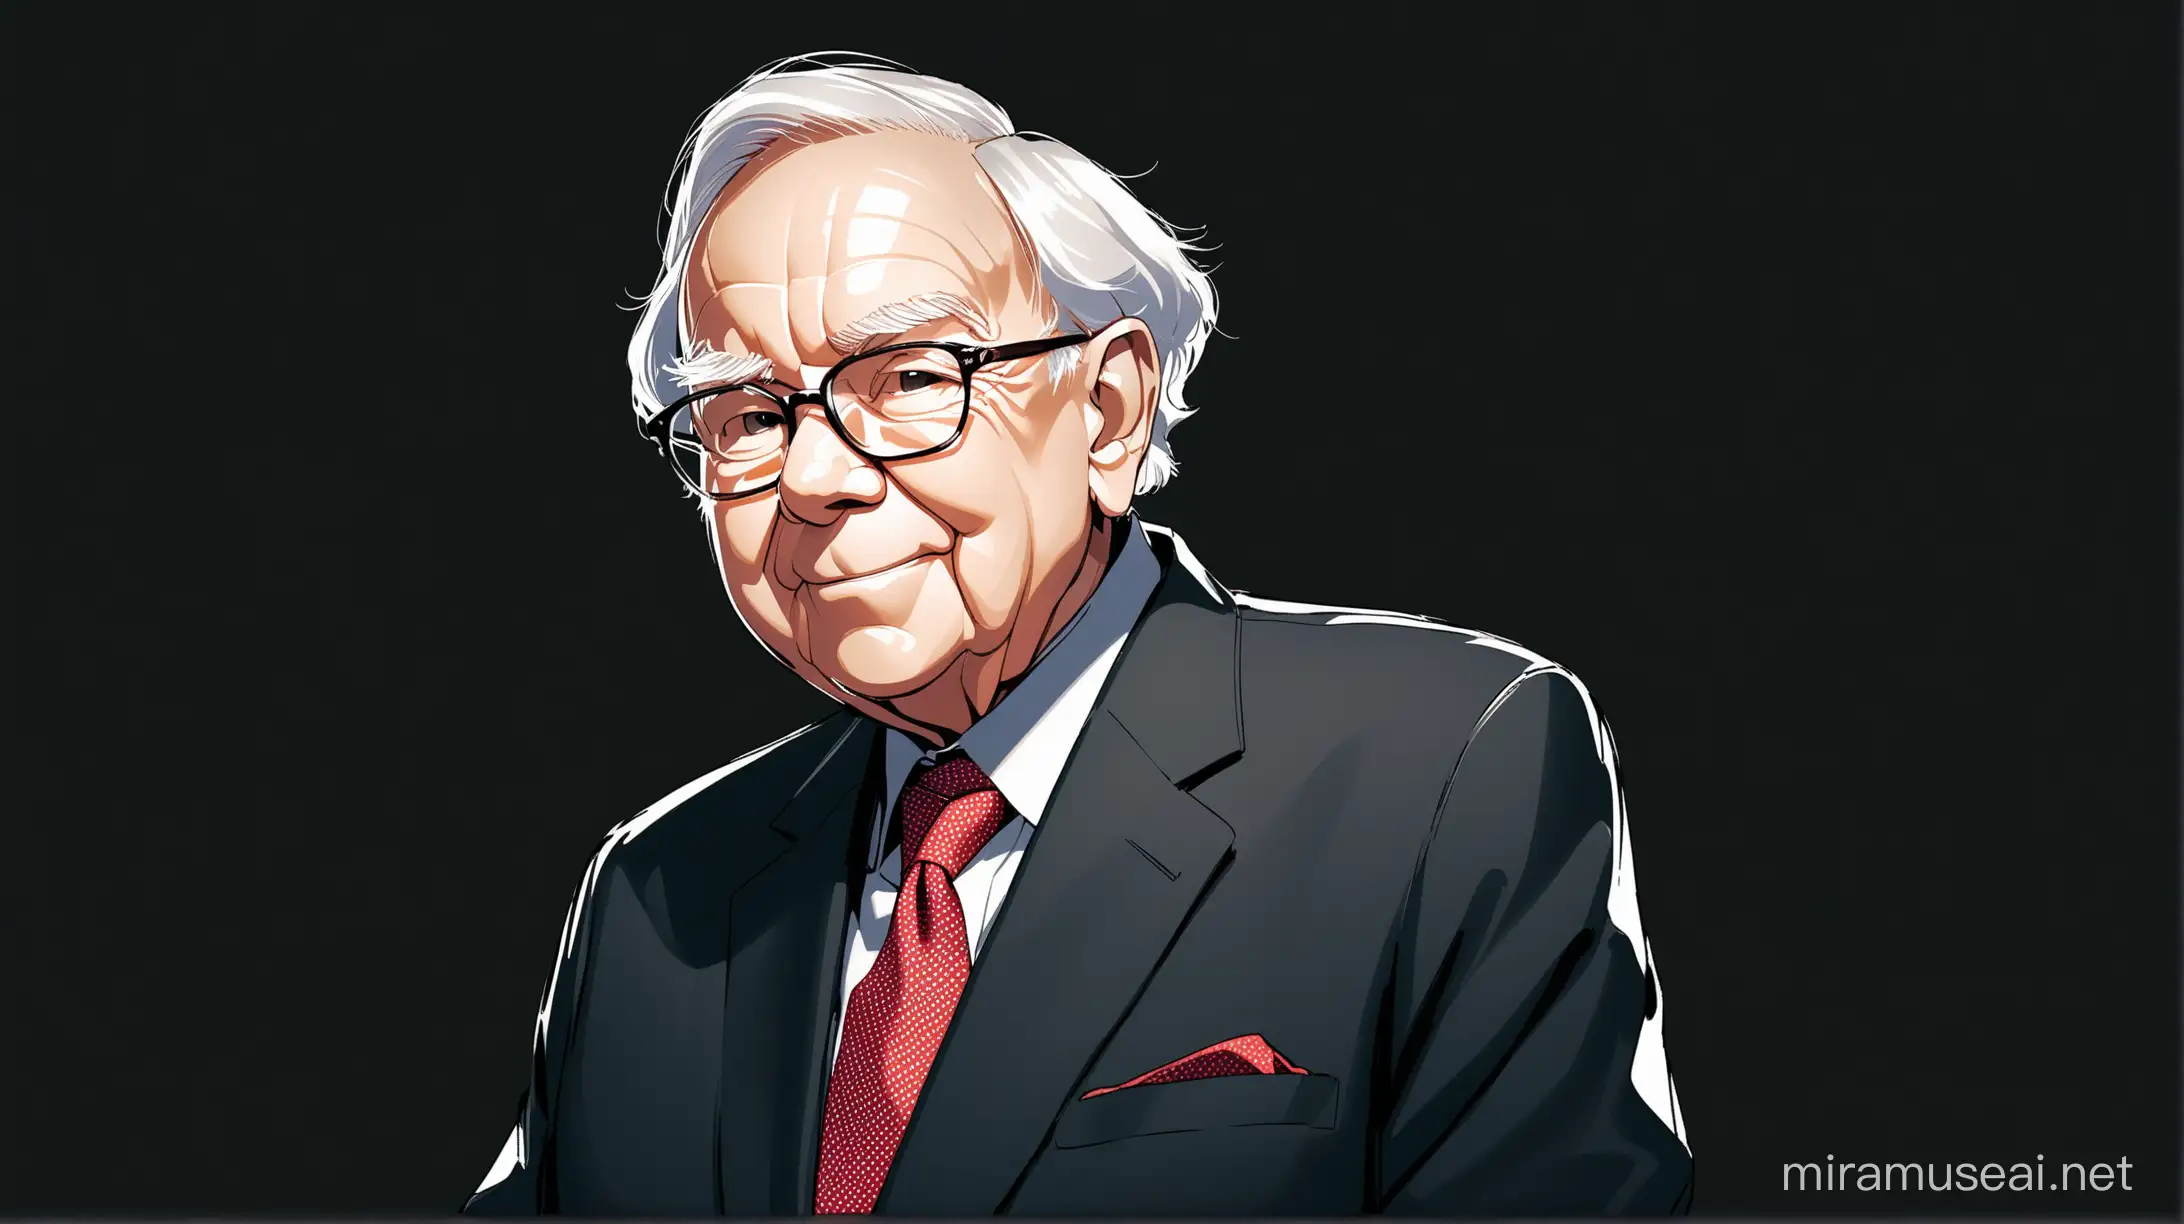 Warren Buffett Giving Wealth Advice Against Black Background